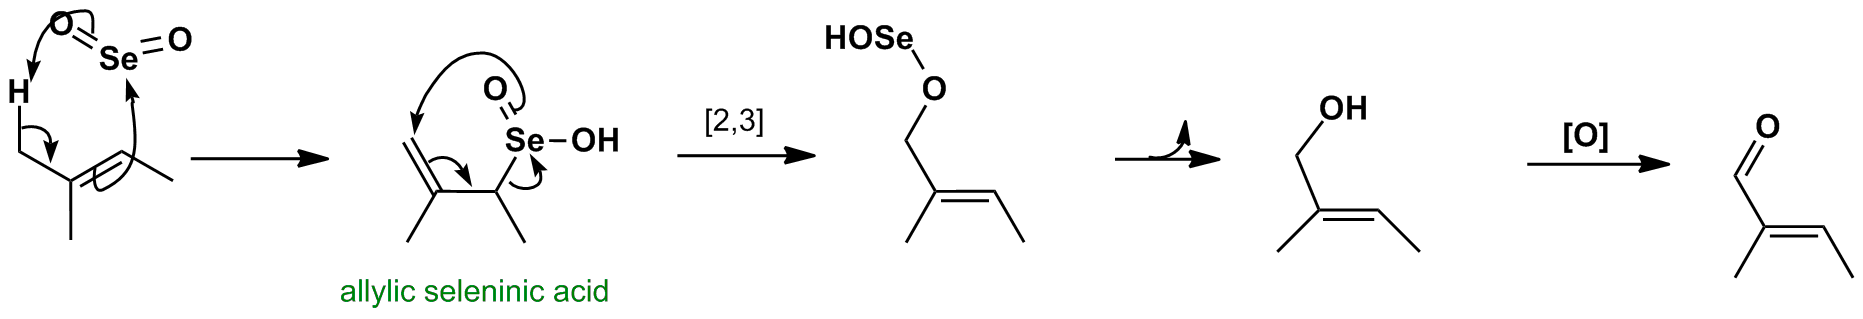 Se allylic oxidation mechanism